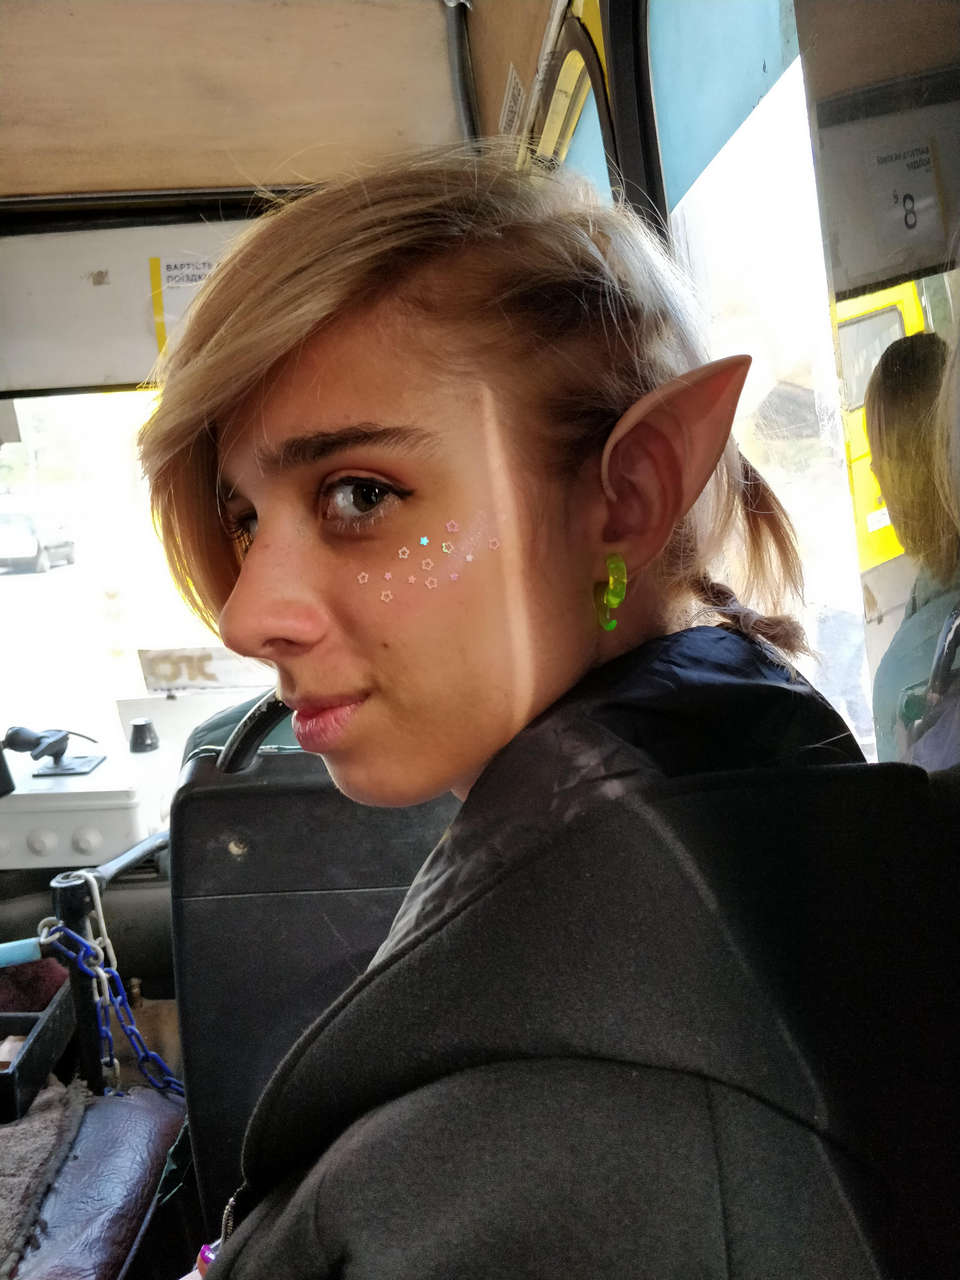 Fairies In Their Natural Habitat Found This Girl In A Random Bus In Kyi